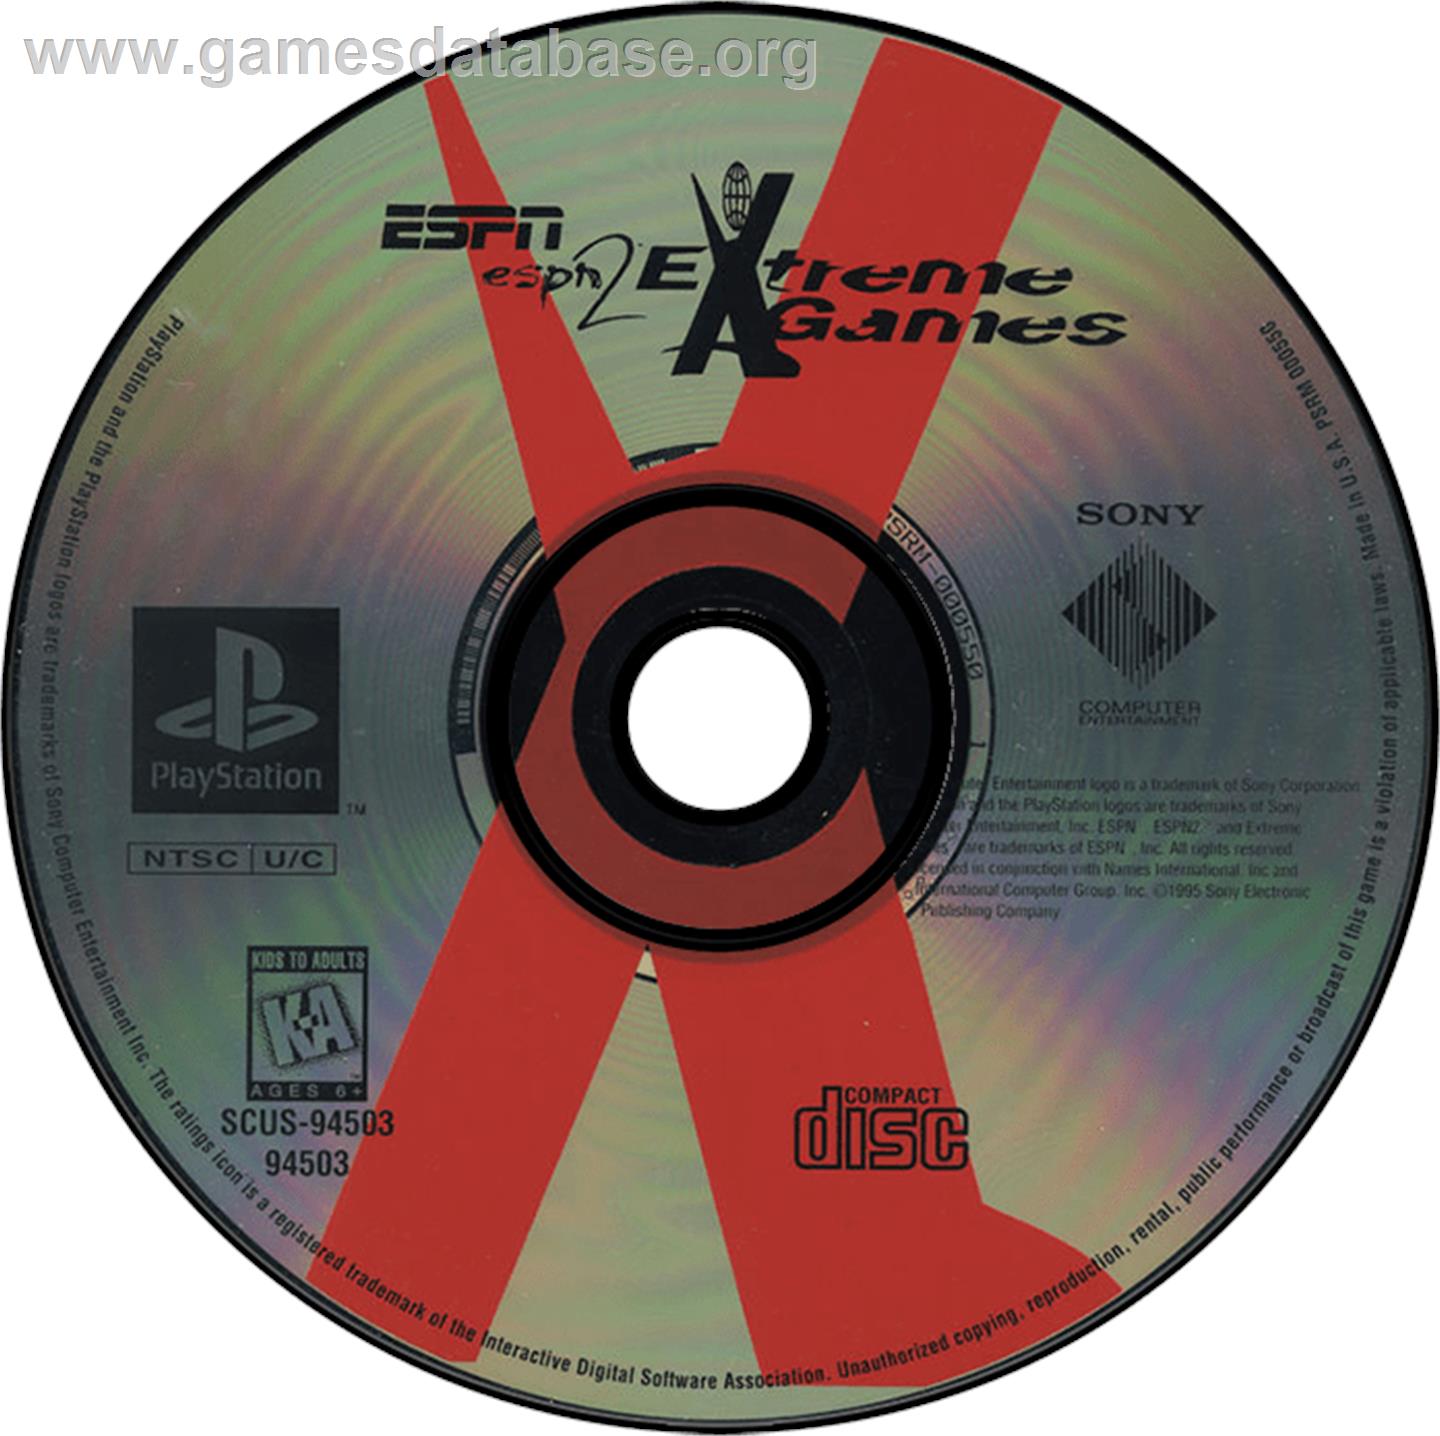 ESPN Extreme Games - Sony Playstation - Artwork - Disc